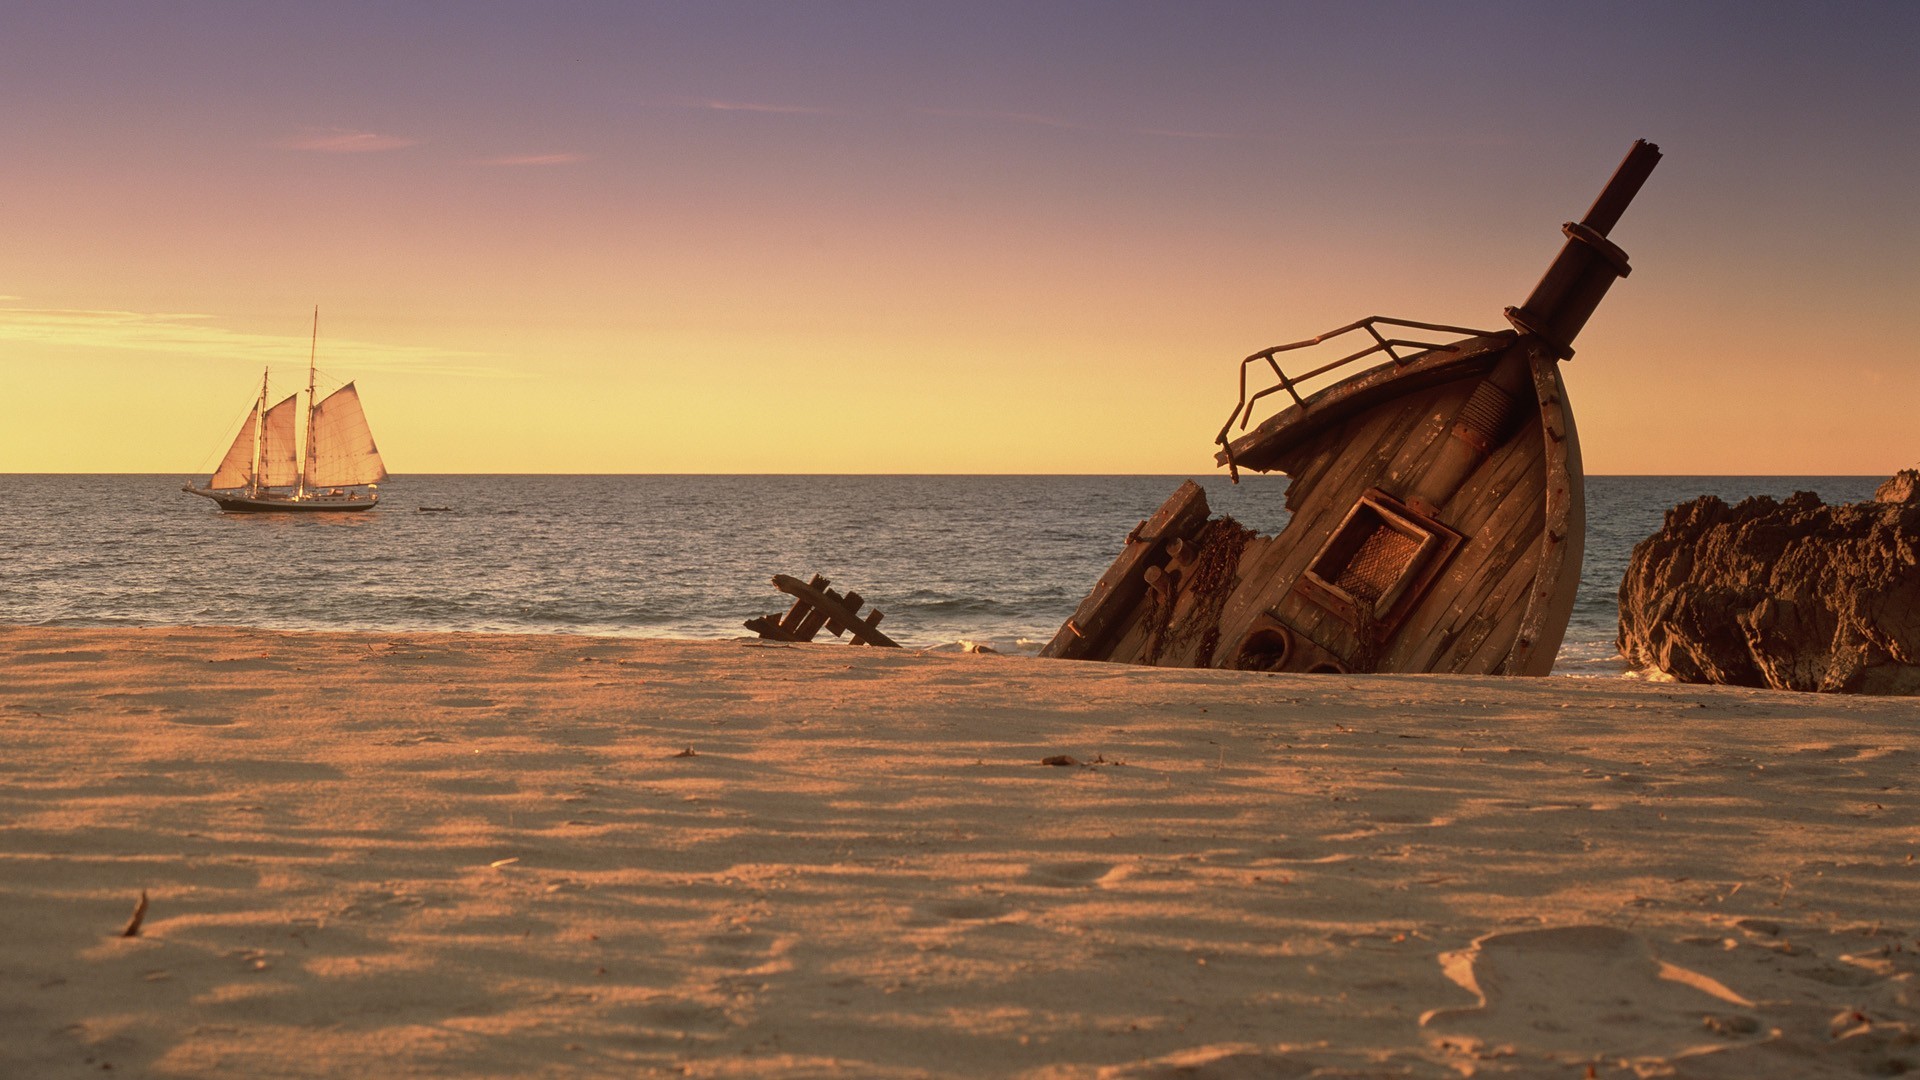 General 1920x1080 beach sky wreck sand boat horizon sea coast sailing ship shipwreck vehicle